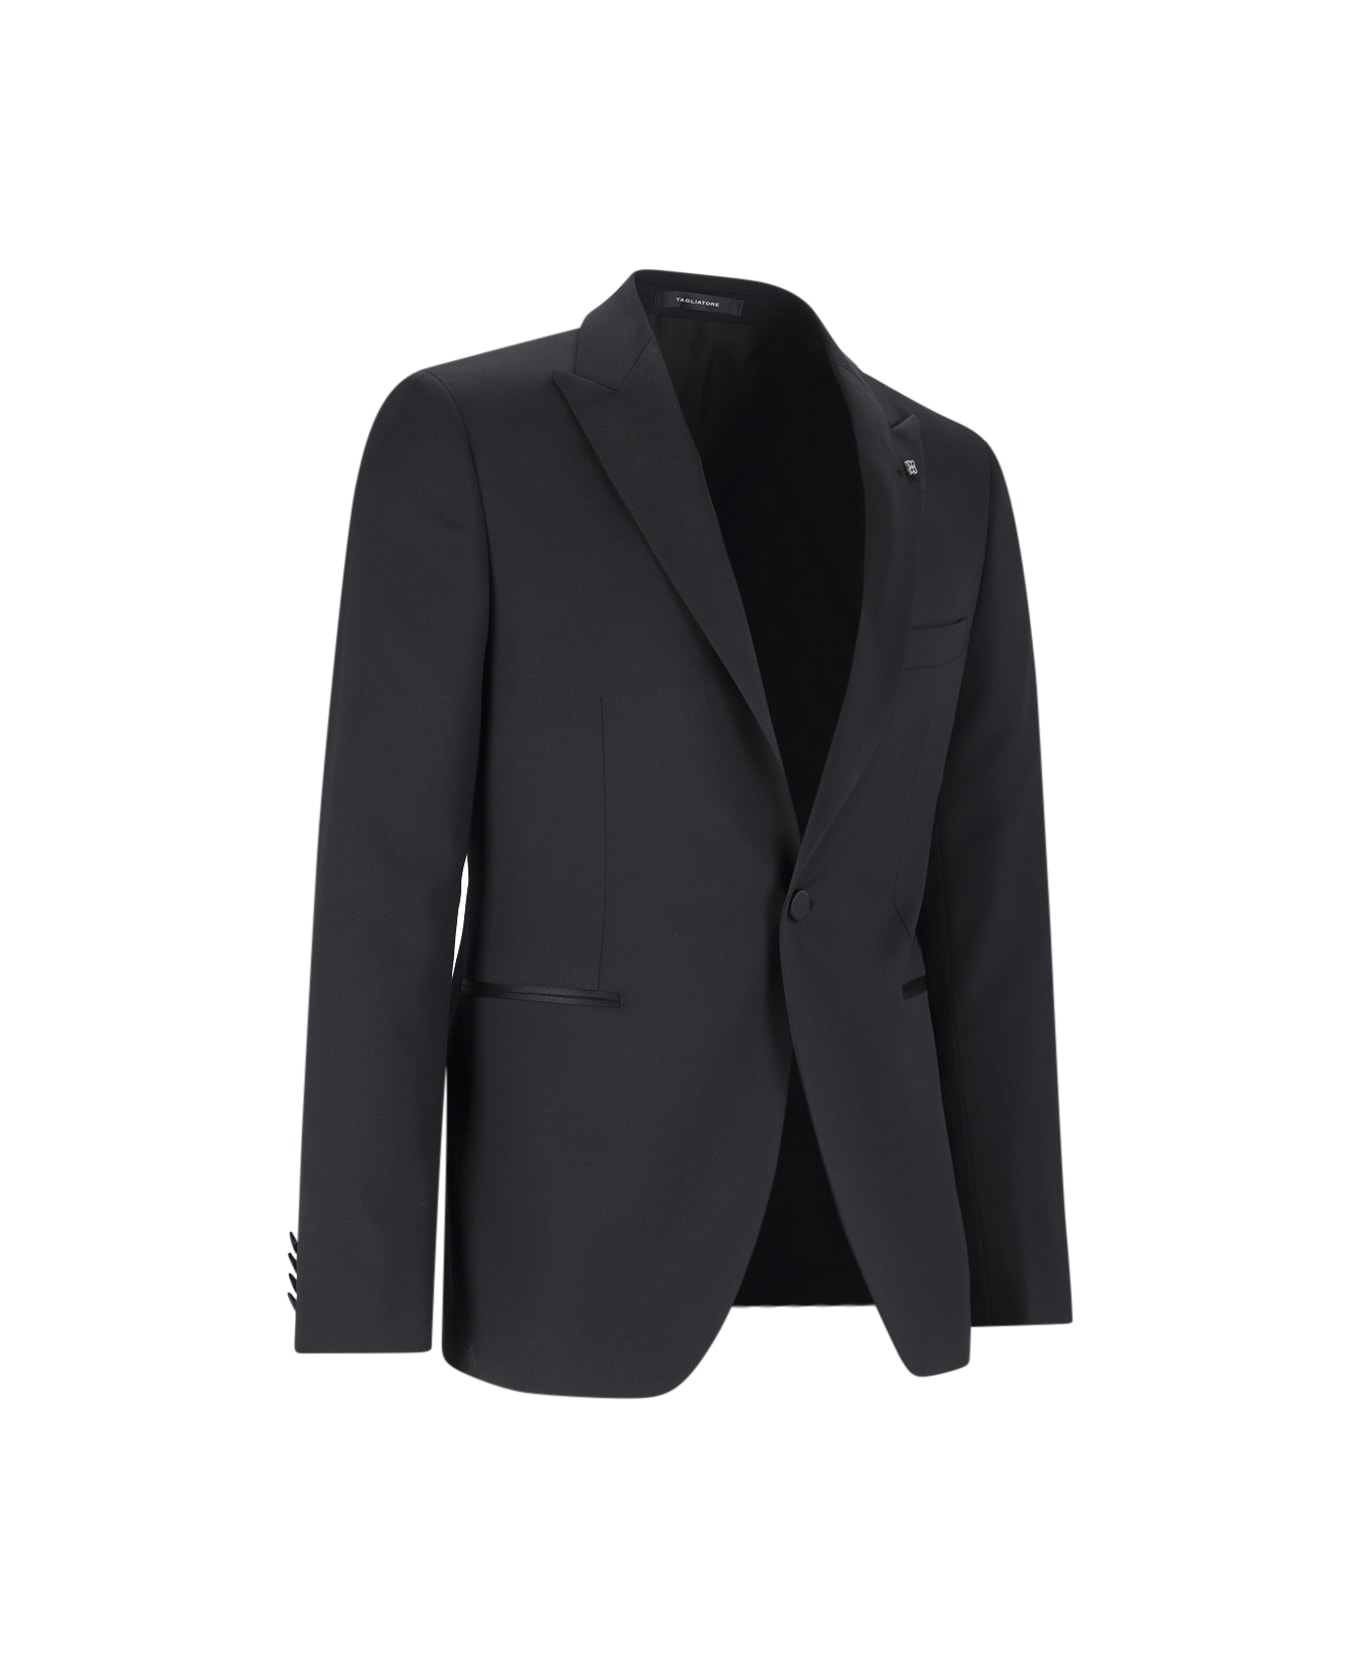 Tagliatore Single Breast Suit - Black   スーツ